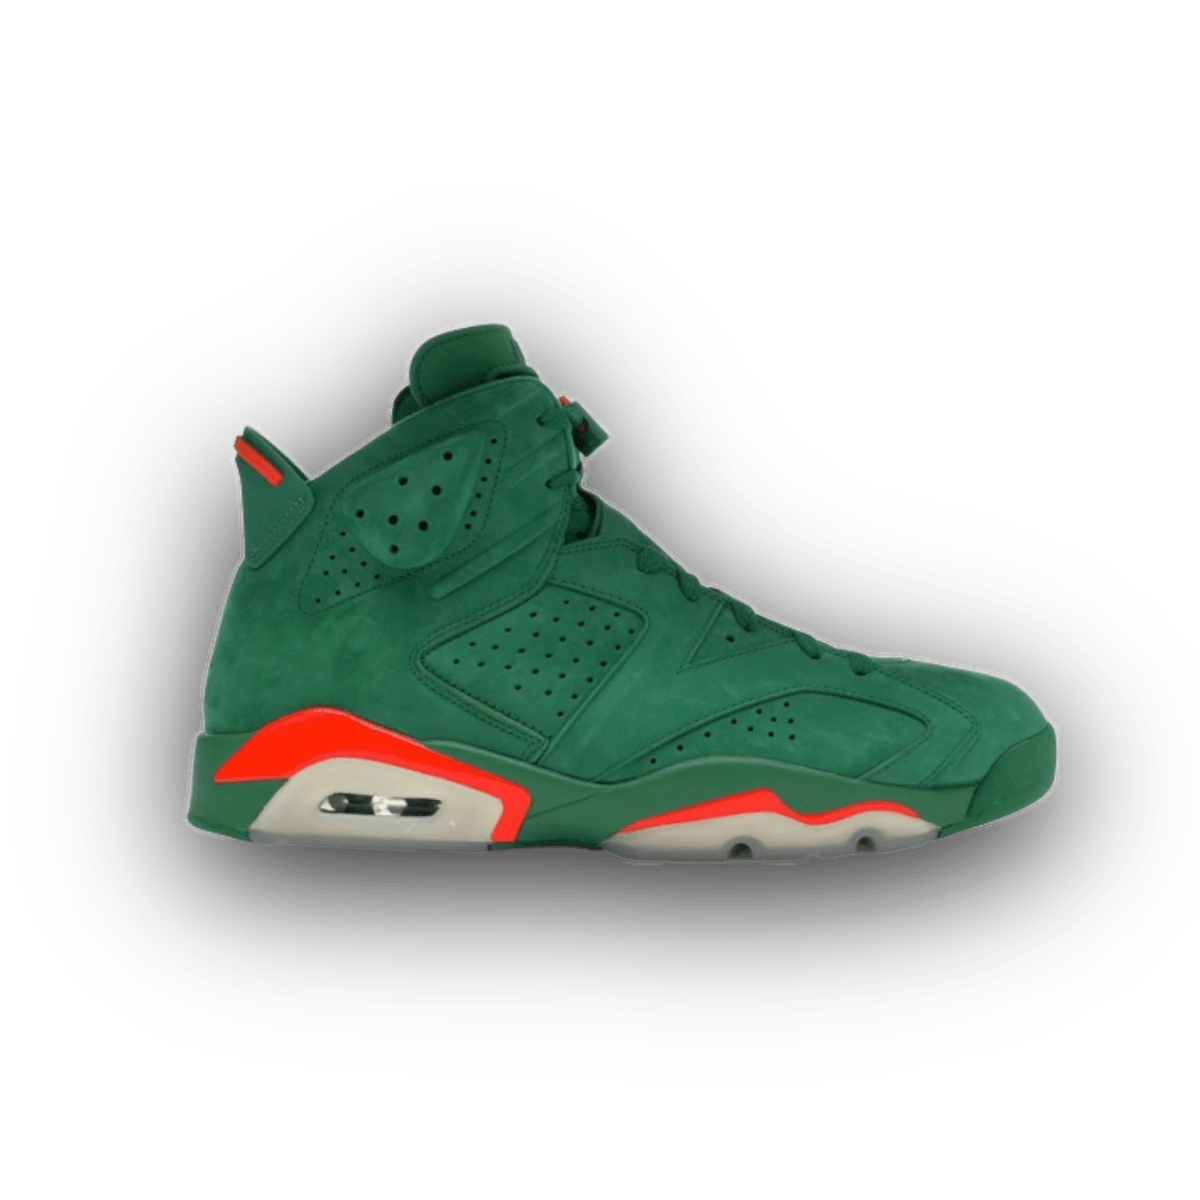 Jordan 6 Retro Gatorade Green - High Sneaker - Jordan - Jawns on Fire - sneakers